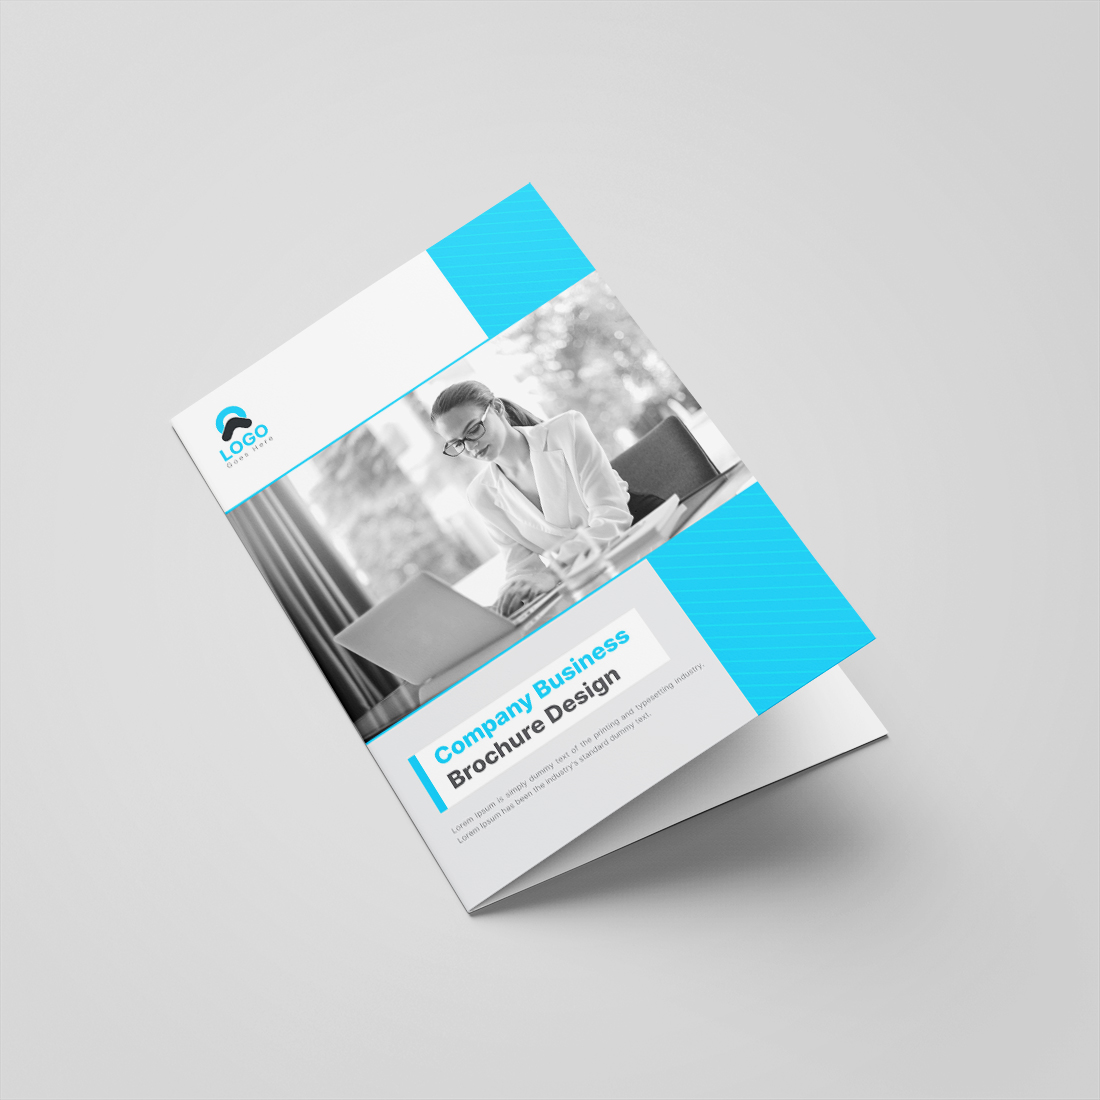 Minimal Bifold Brochure Or Company Profile Or Annual Report Template Design cover image.